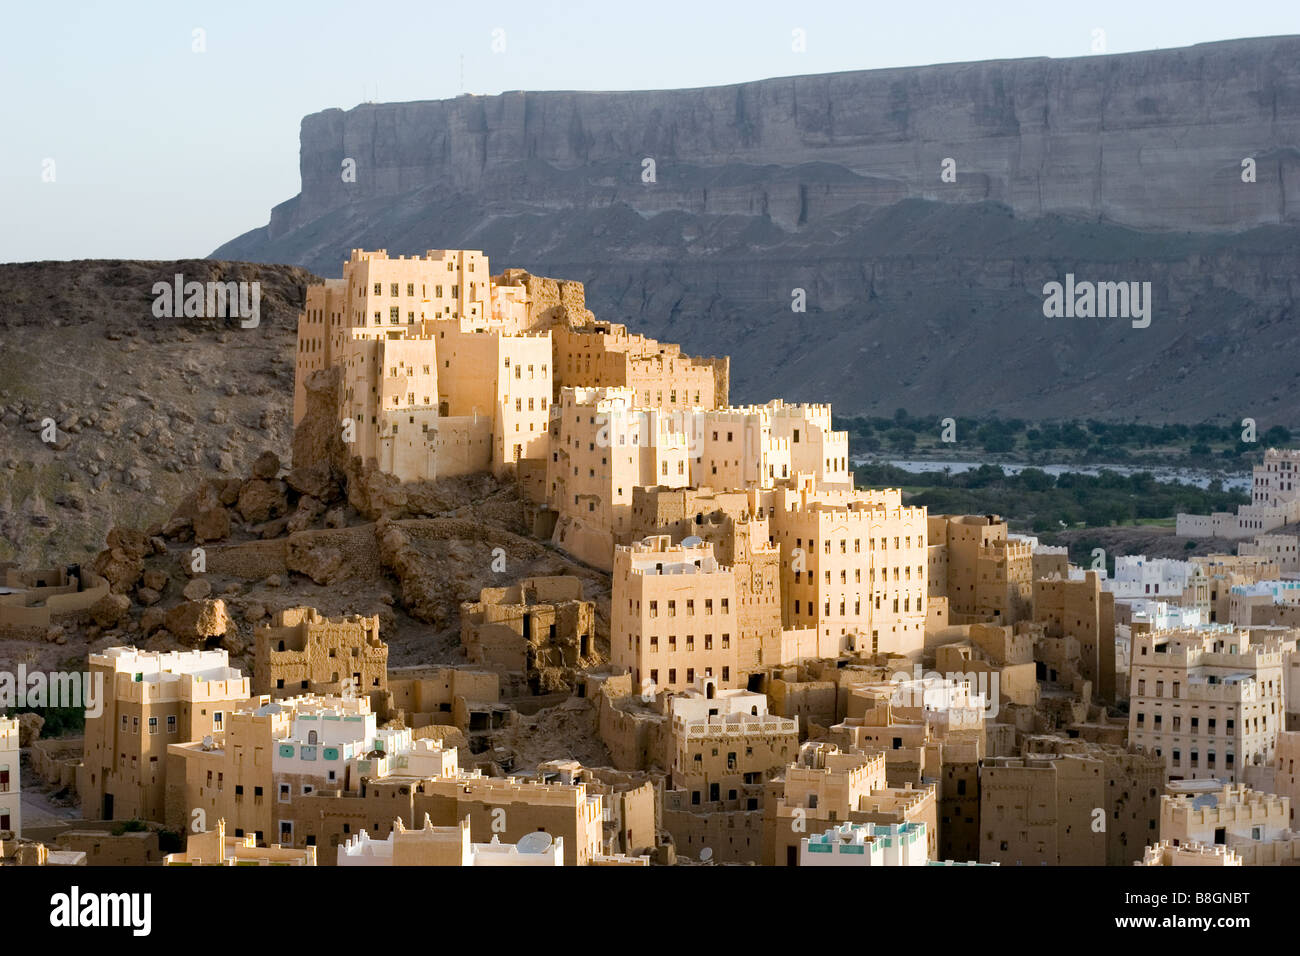 village in wadi do'an yemen Stock Photo